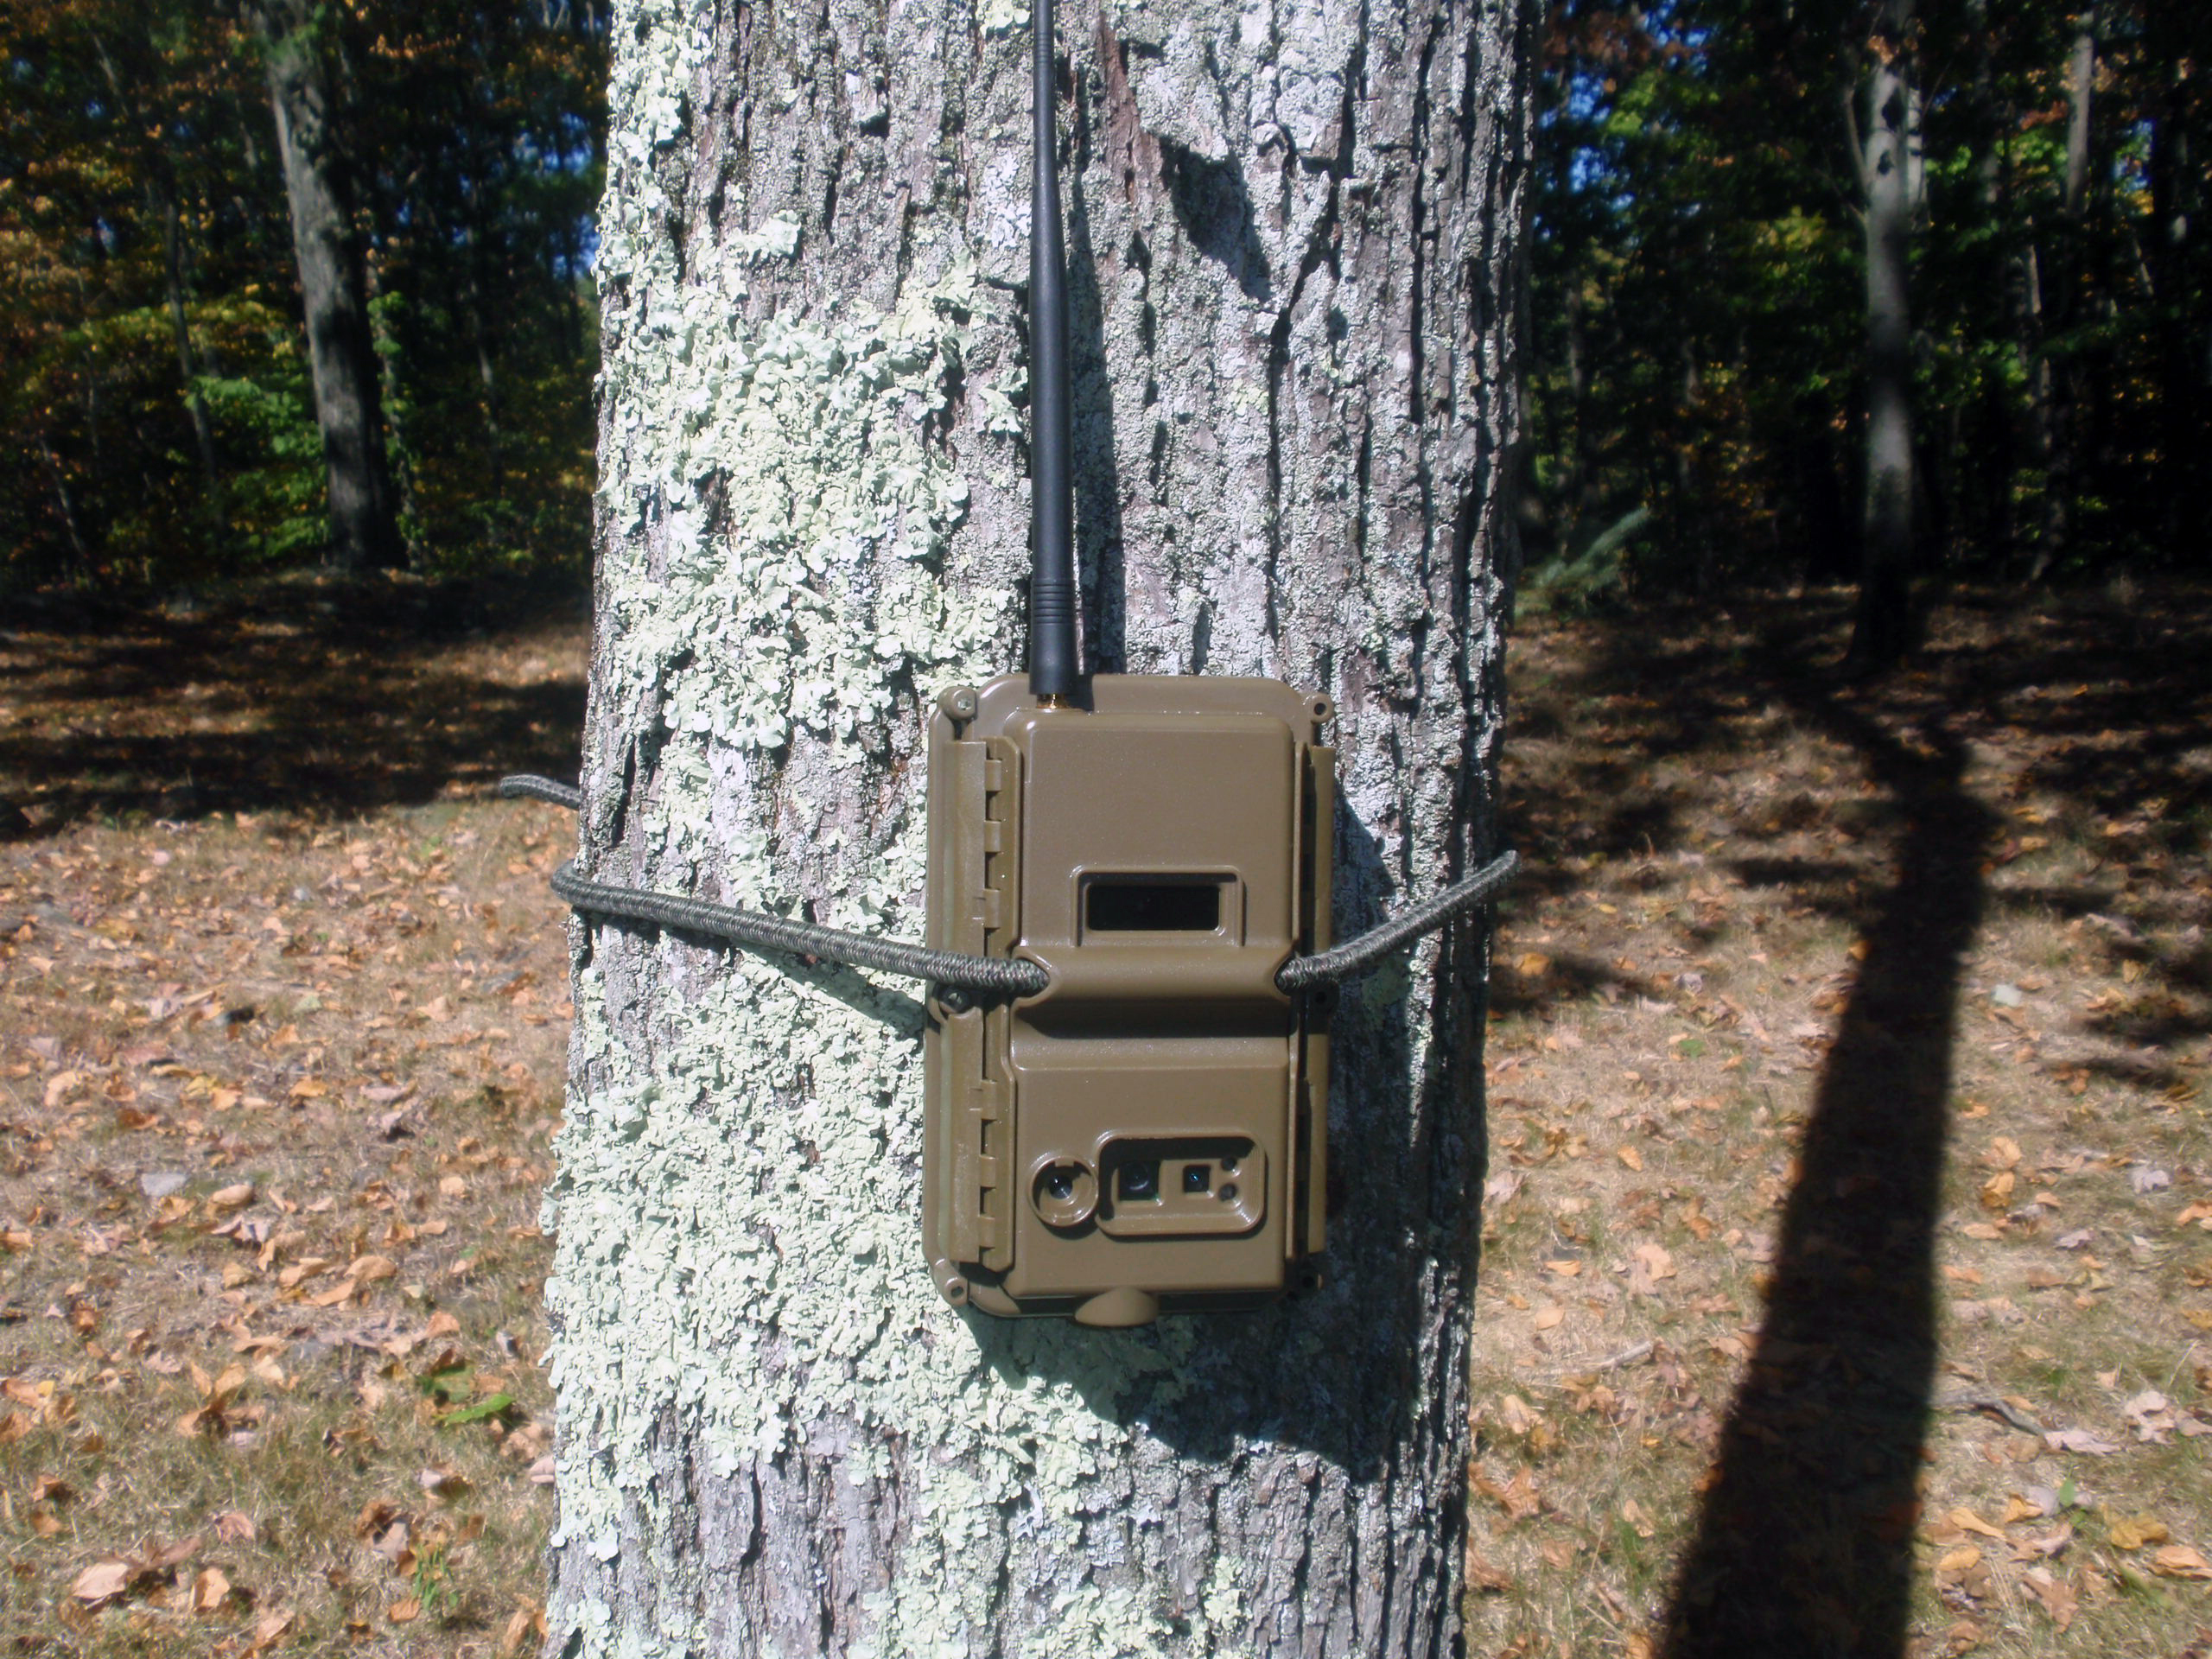 "Poacher cam set up on tree trunk"